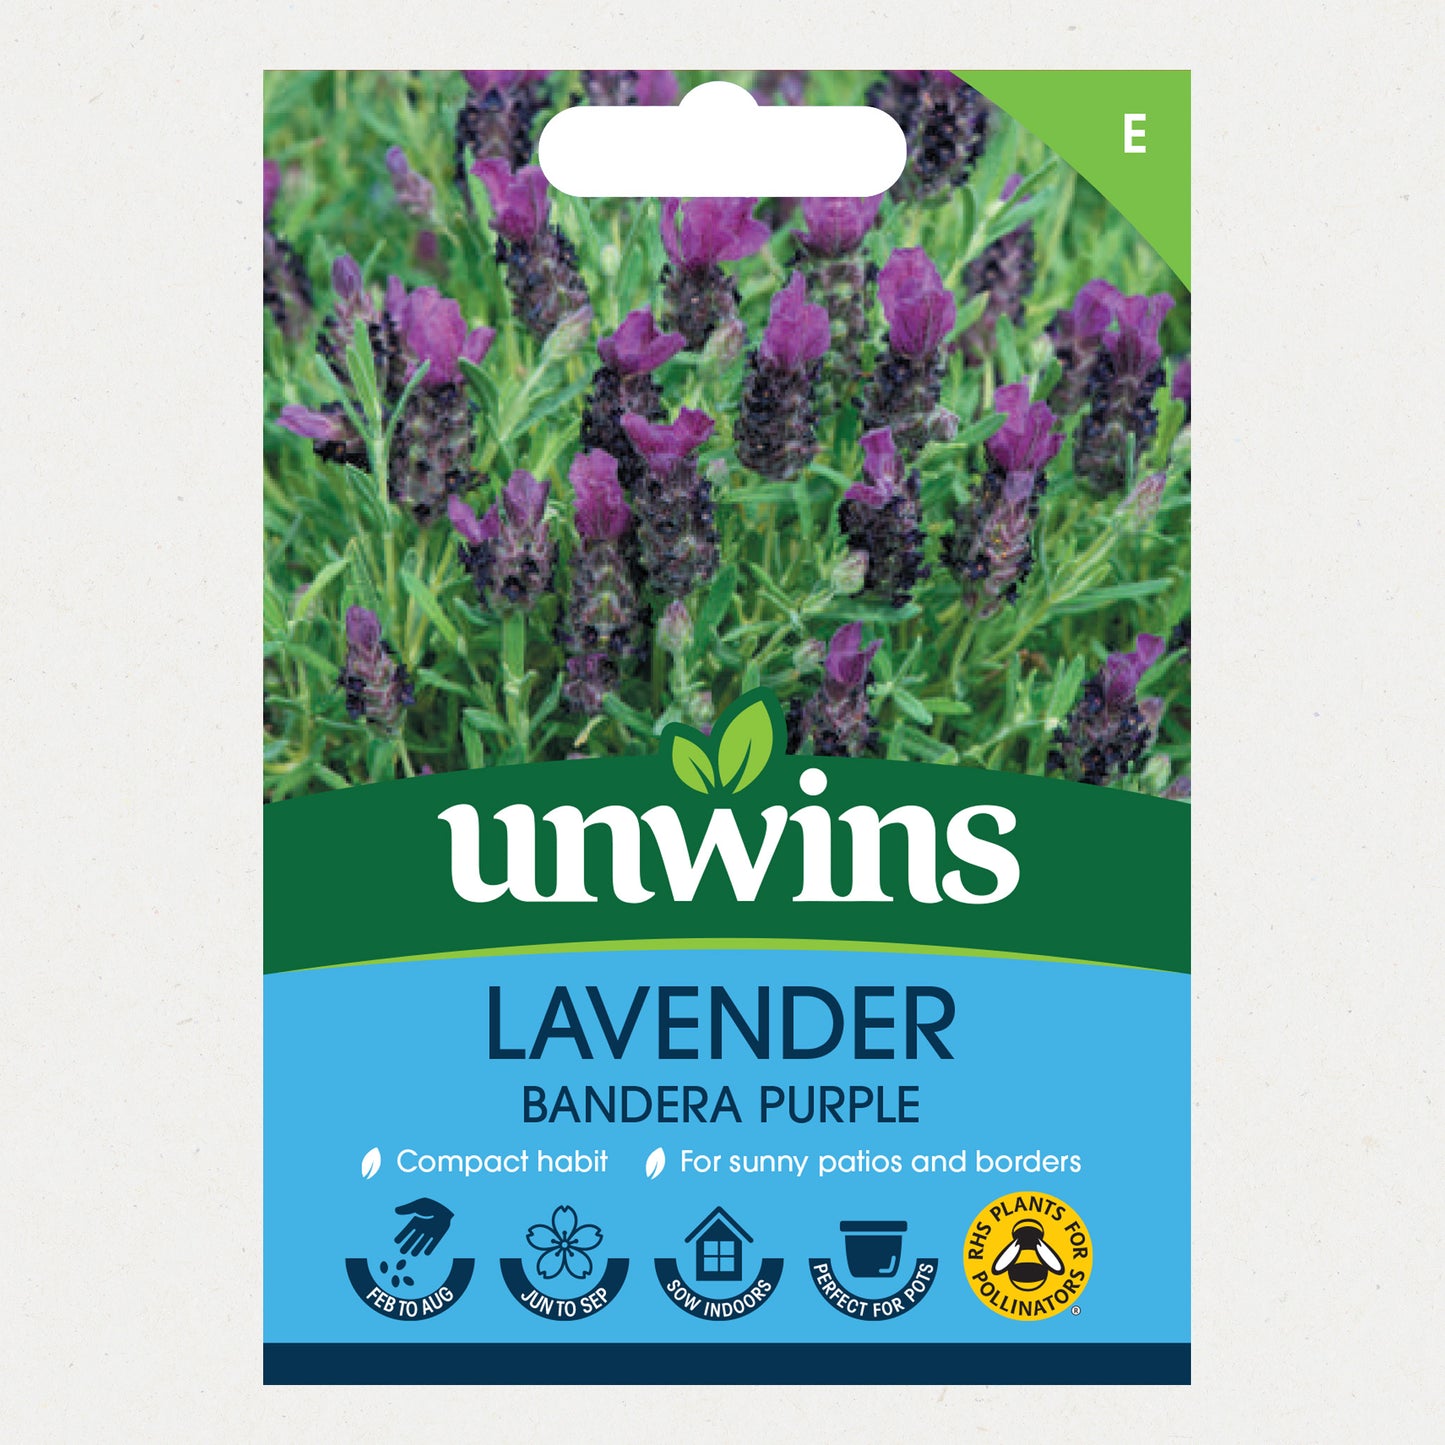 Unwins Lavender Bandera Purple Seeds Front